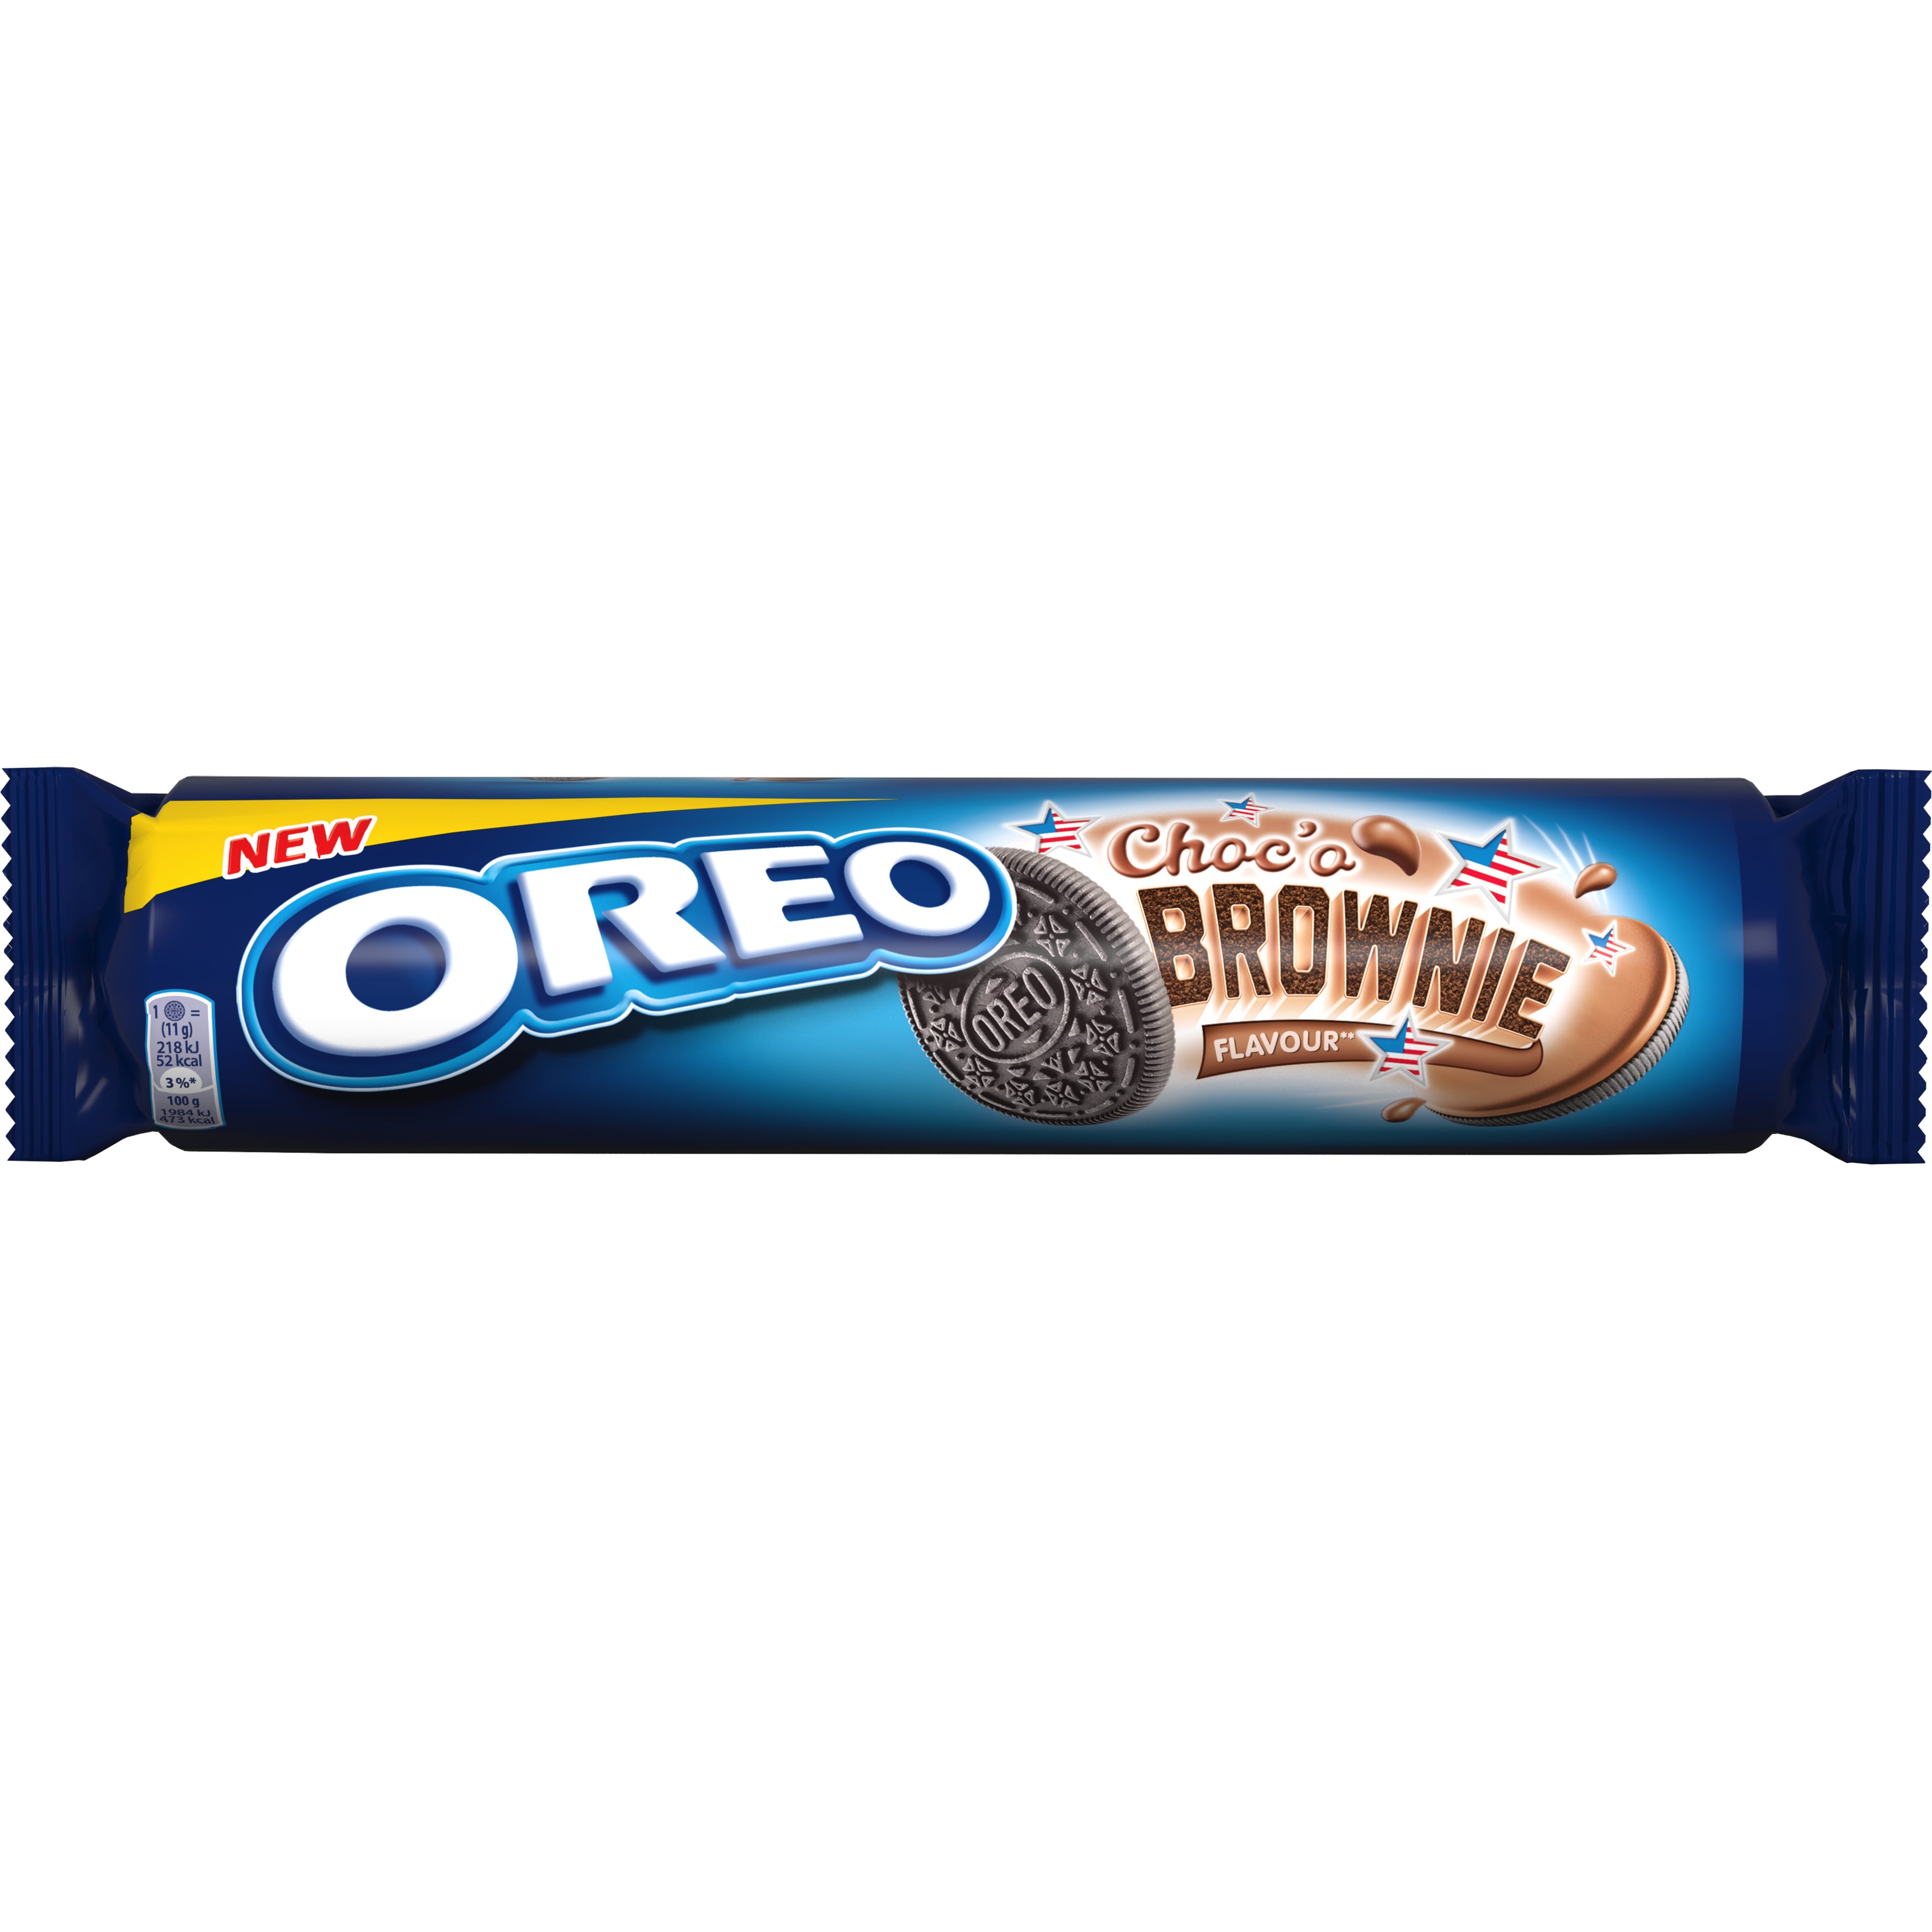 Oreo Brownie Choc'o - ENGLAND (16 Count)